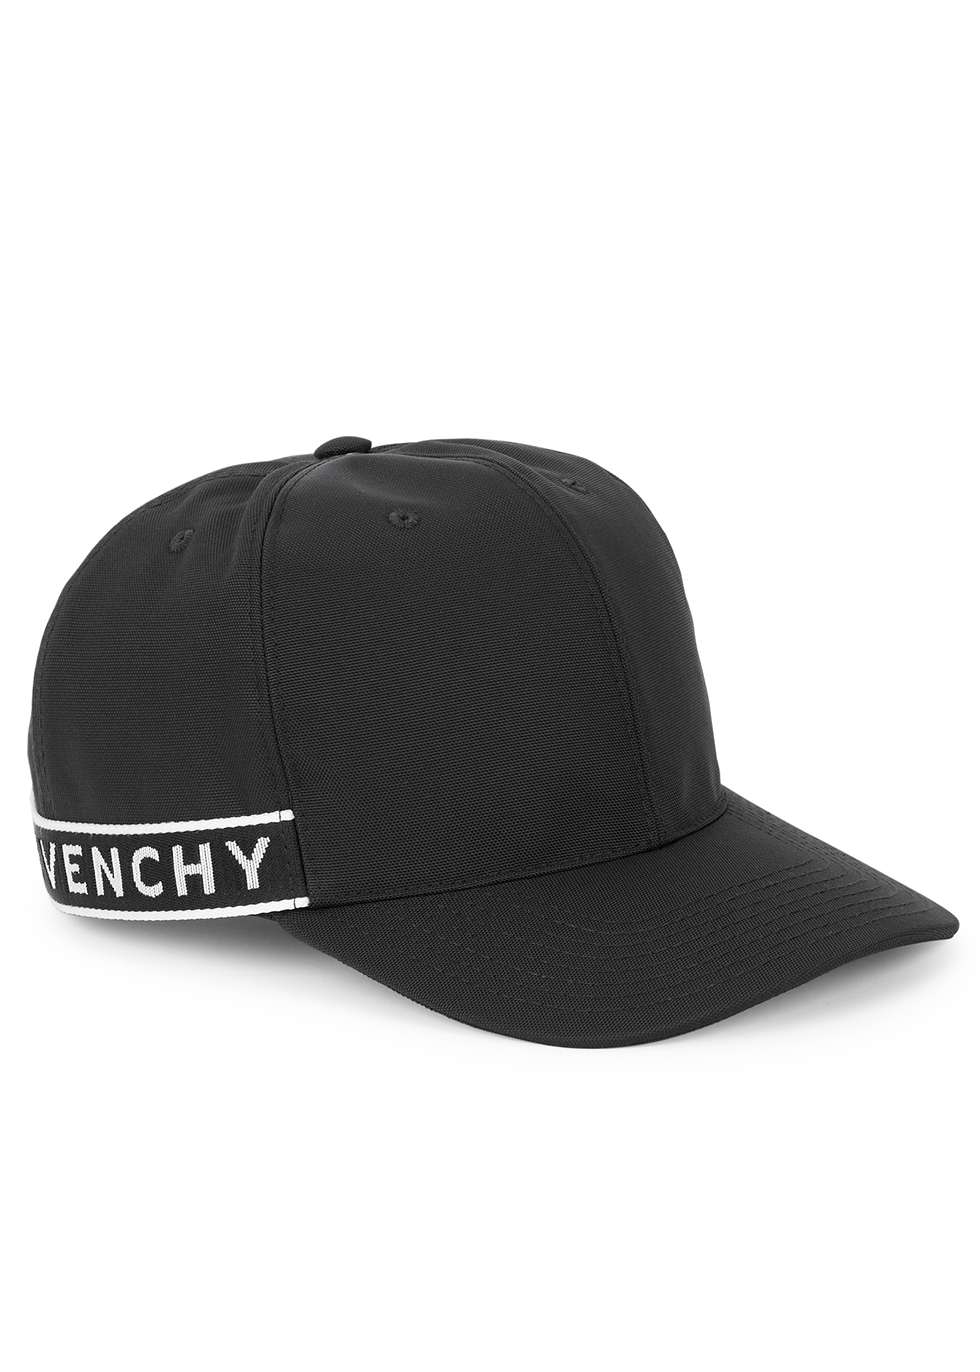 Givenchy Black logo twill cap - Harvey Nichols